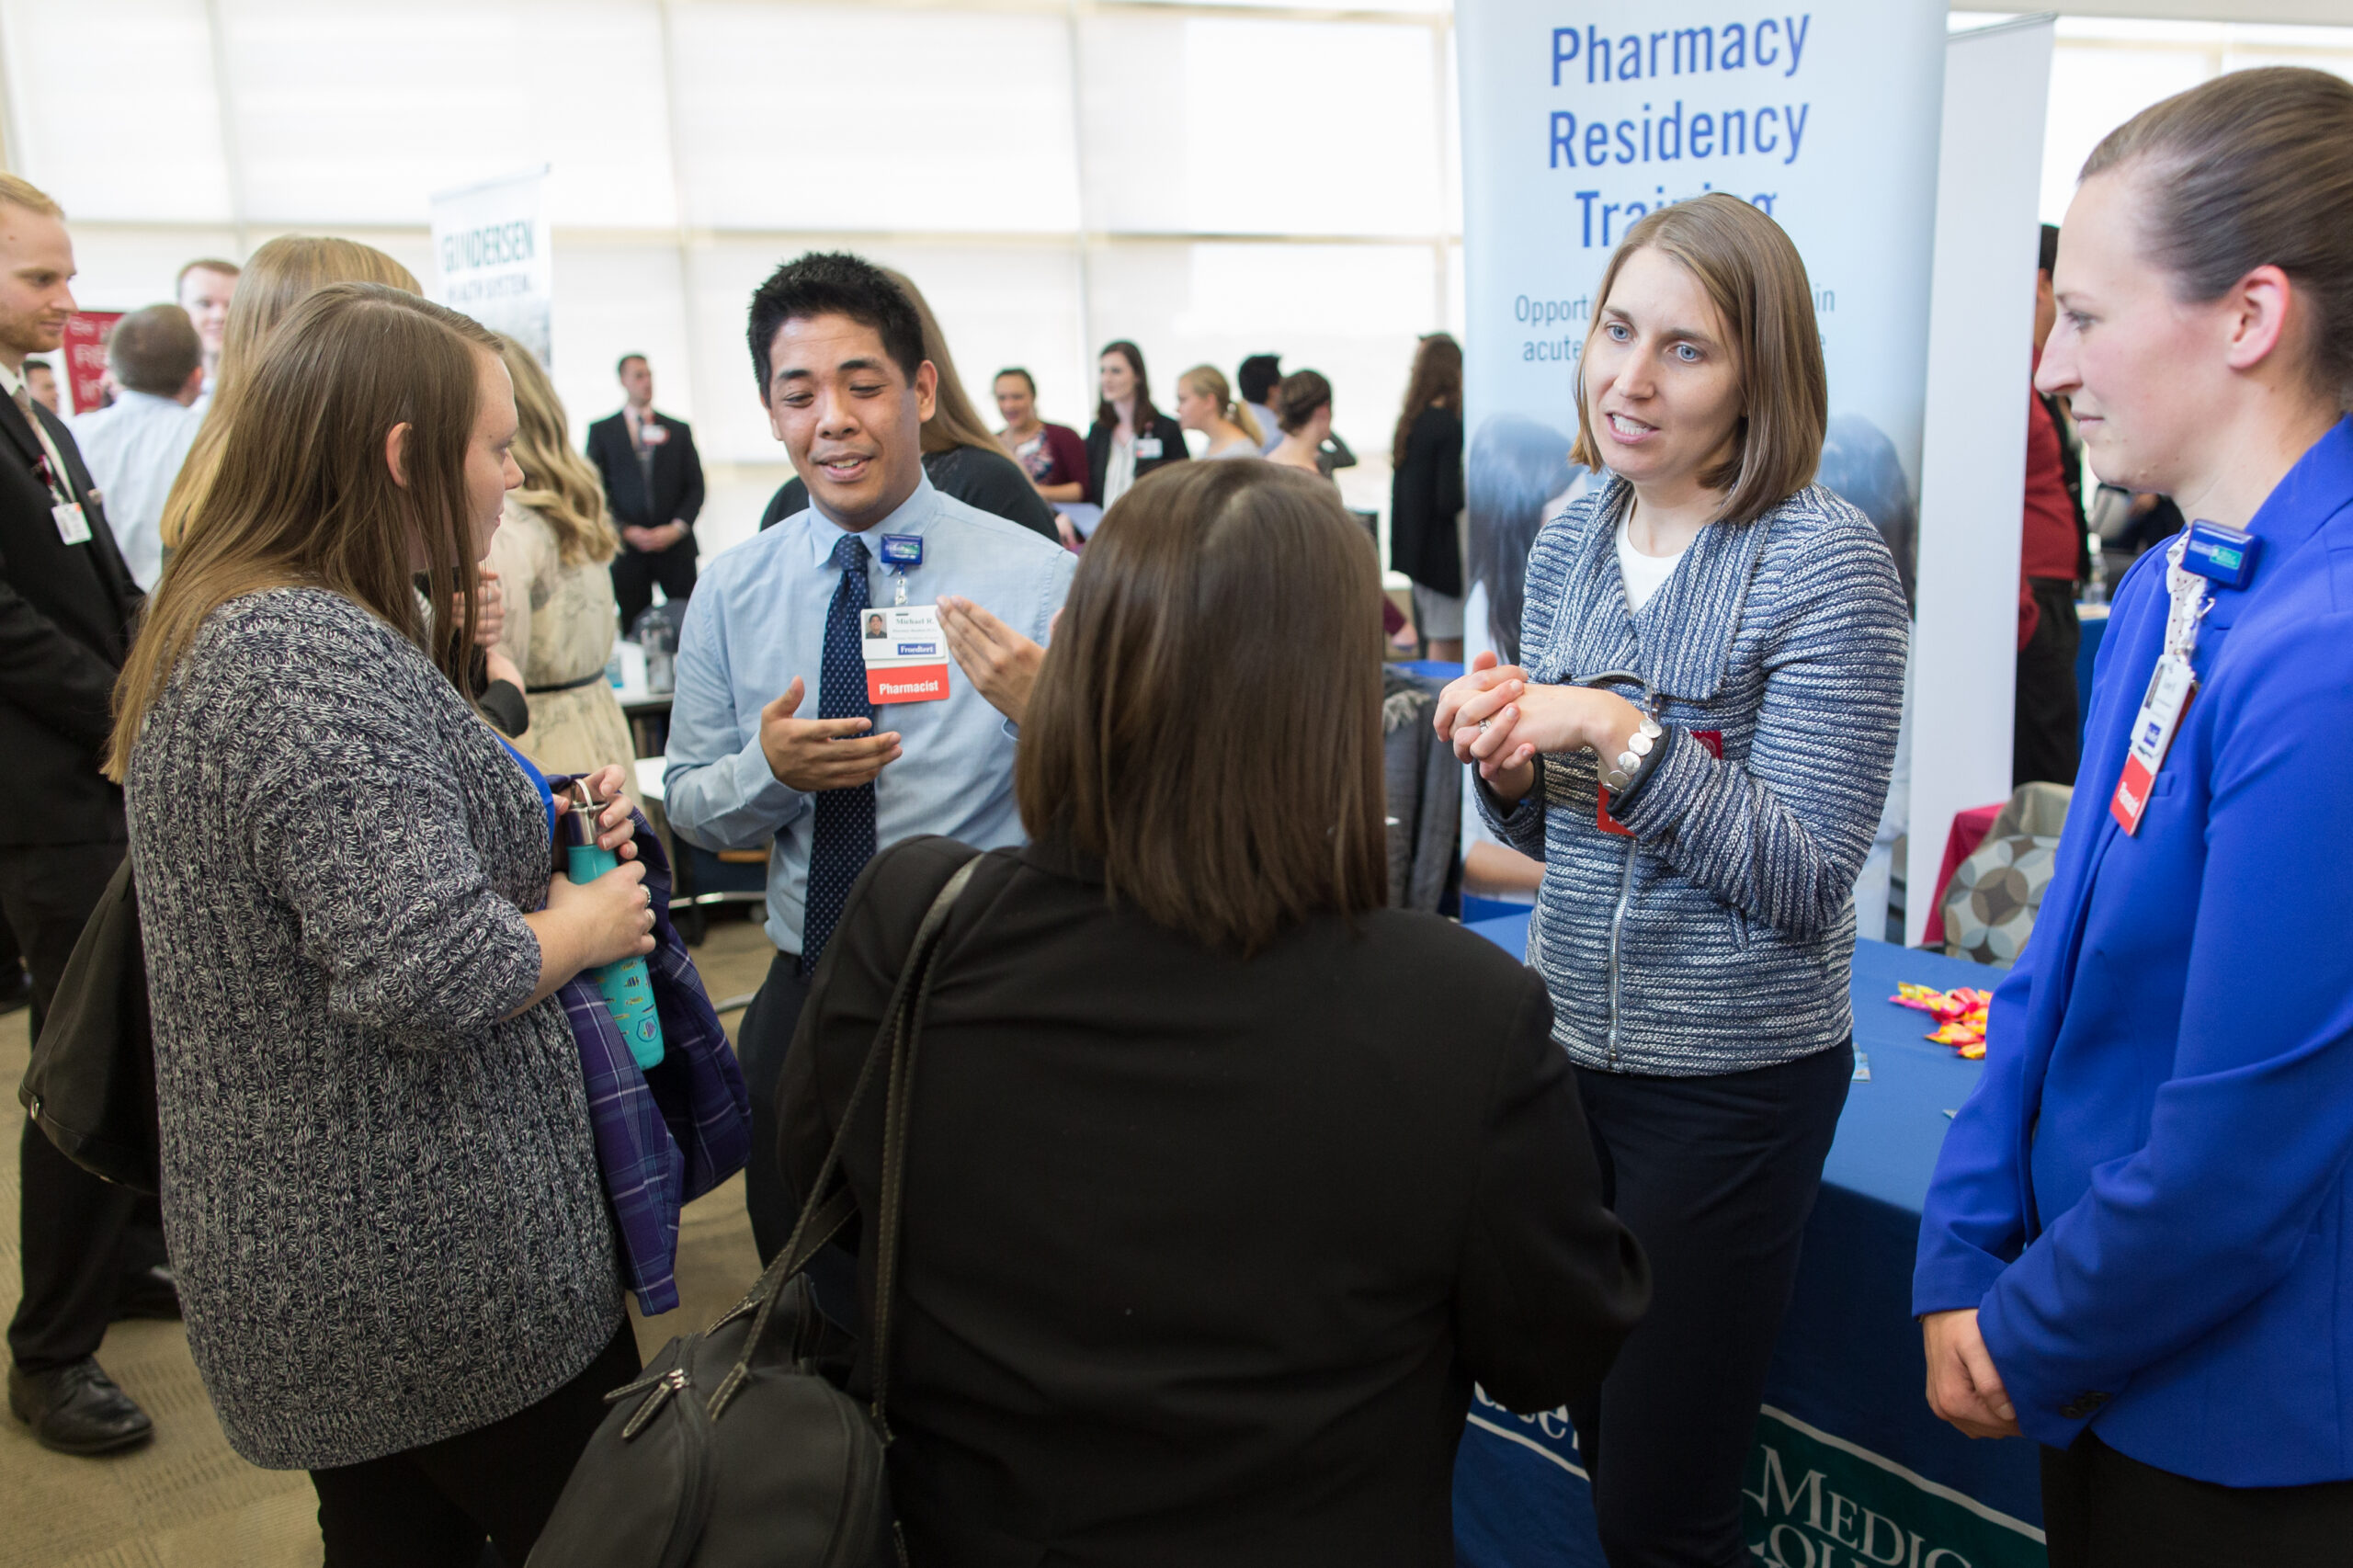 Career Fair at the UW-Madison School of Pharmacy for PharmD students